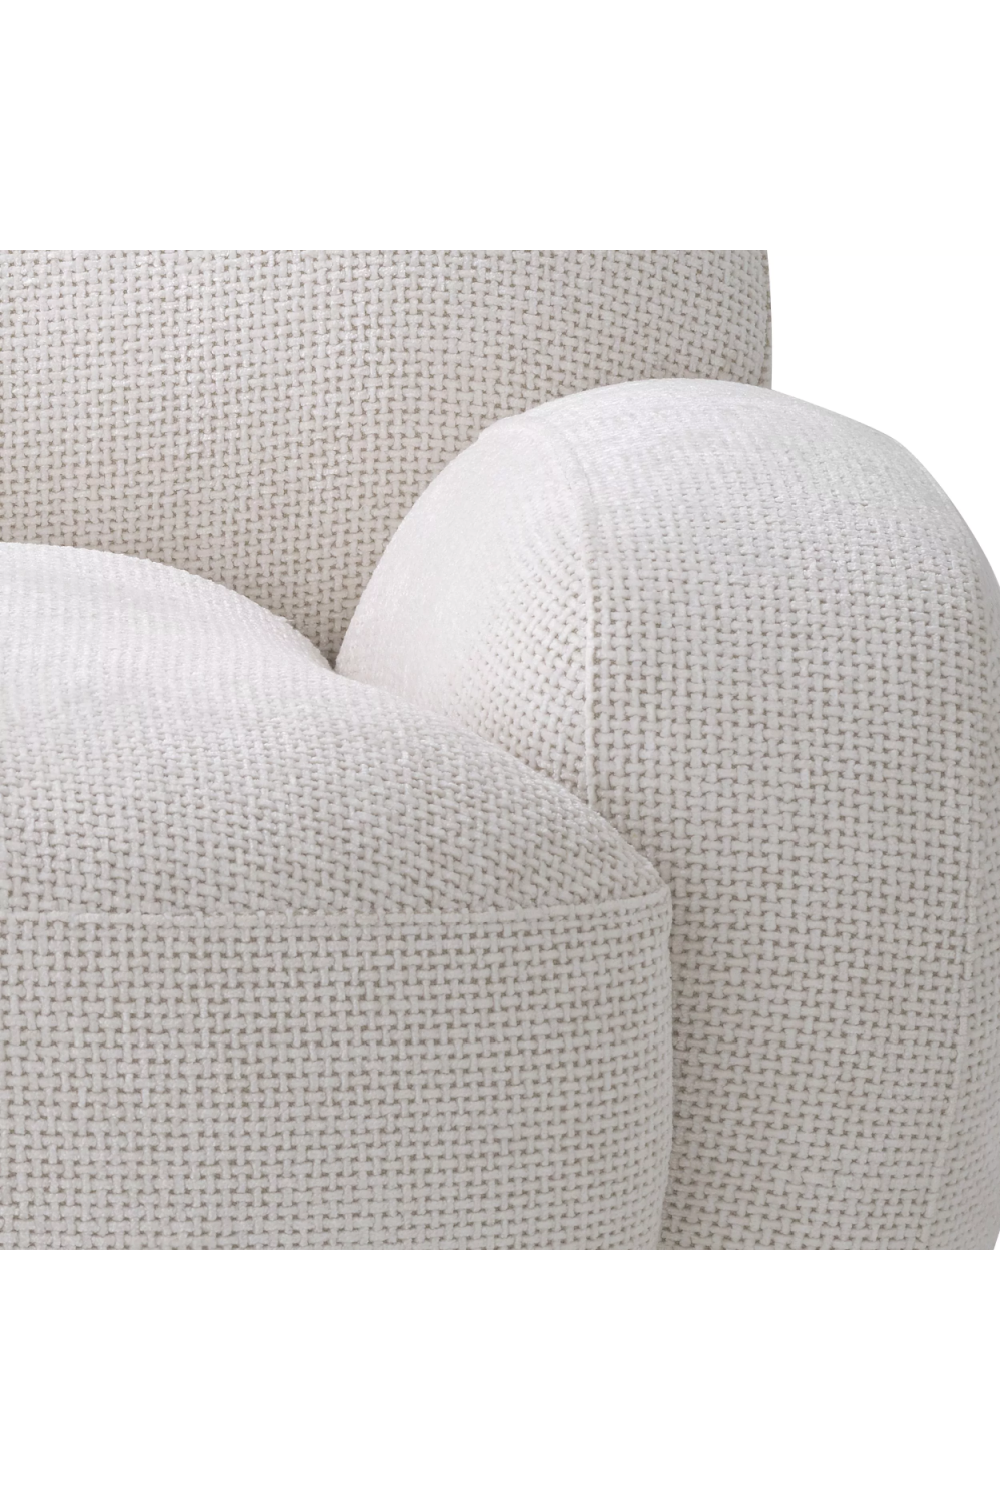 White Curved Swivel Chair | Eichholtz Udine | Oroa.com